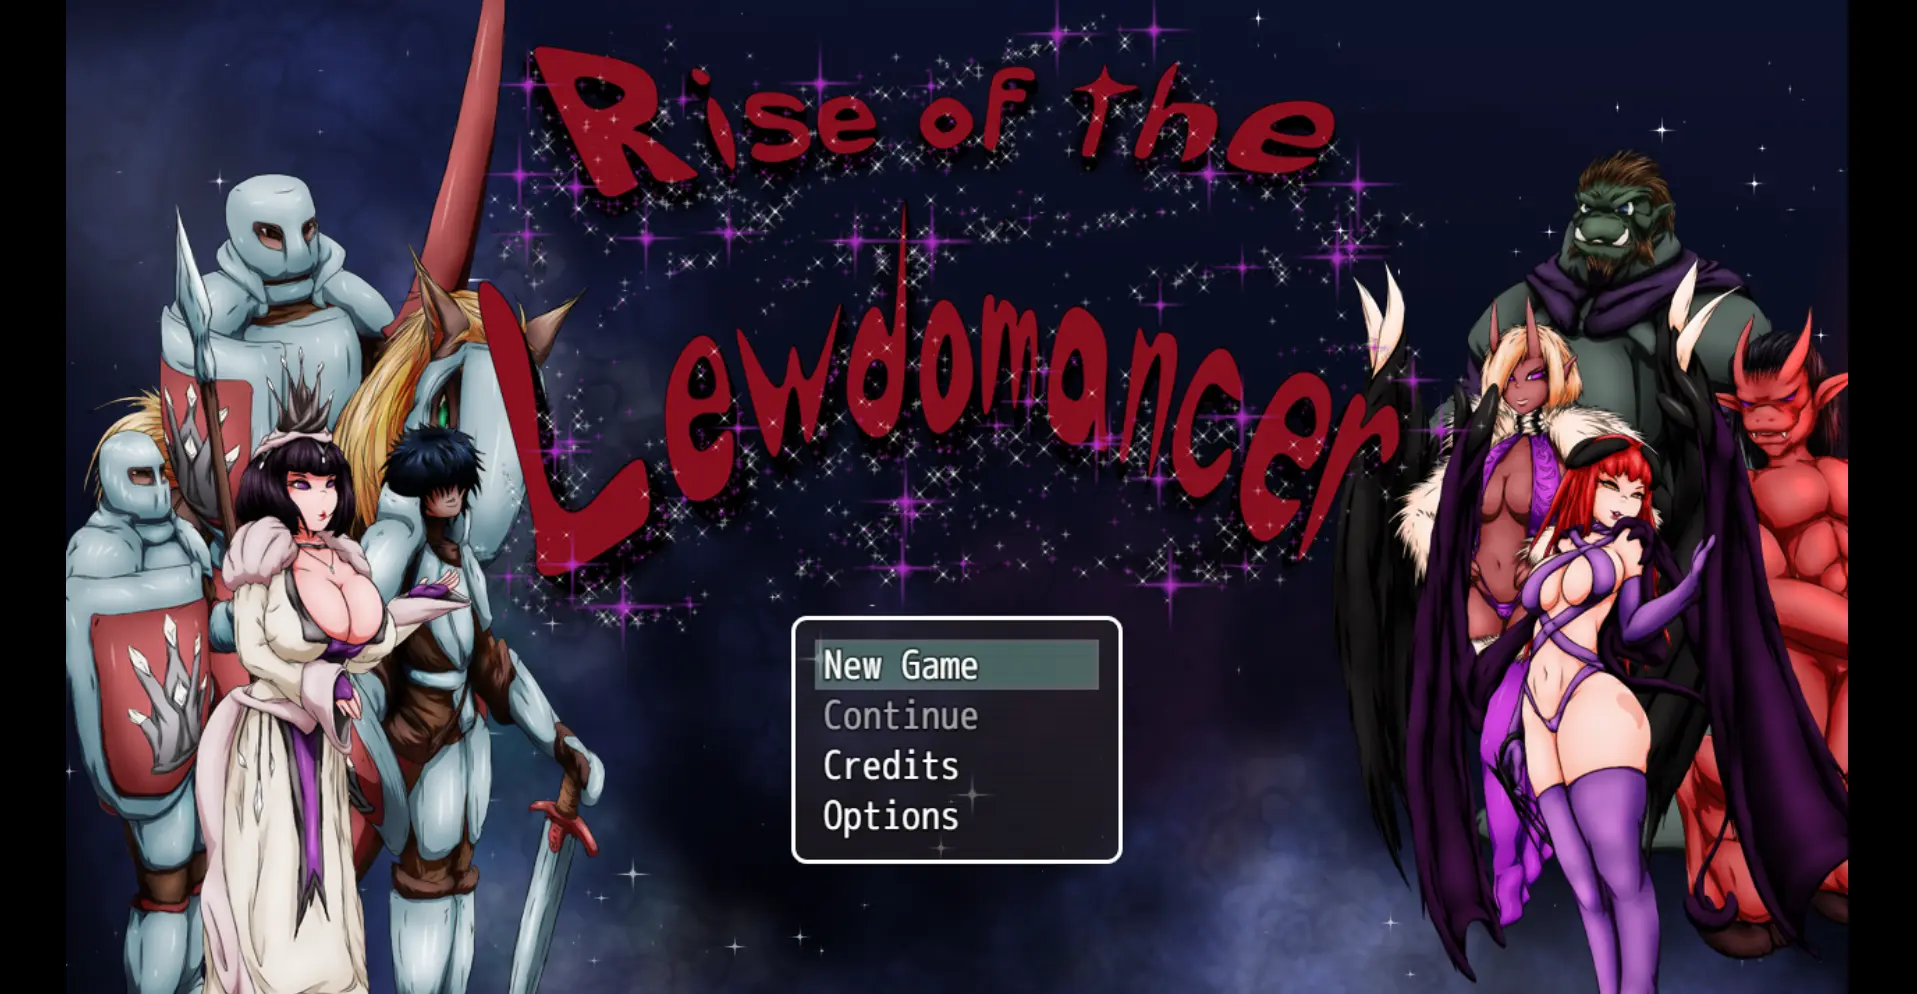 Rise of the Lewdomancer main image